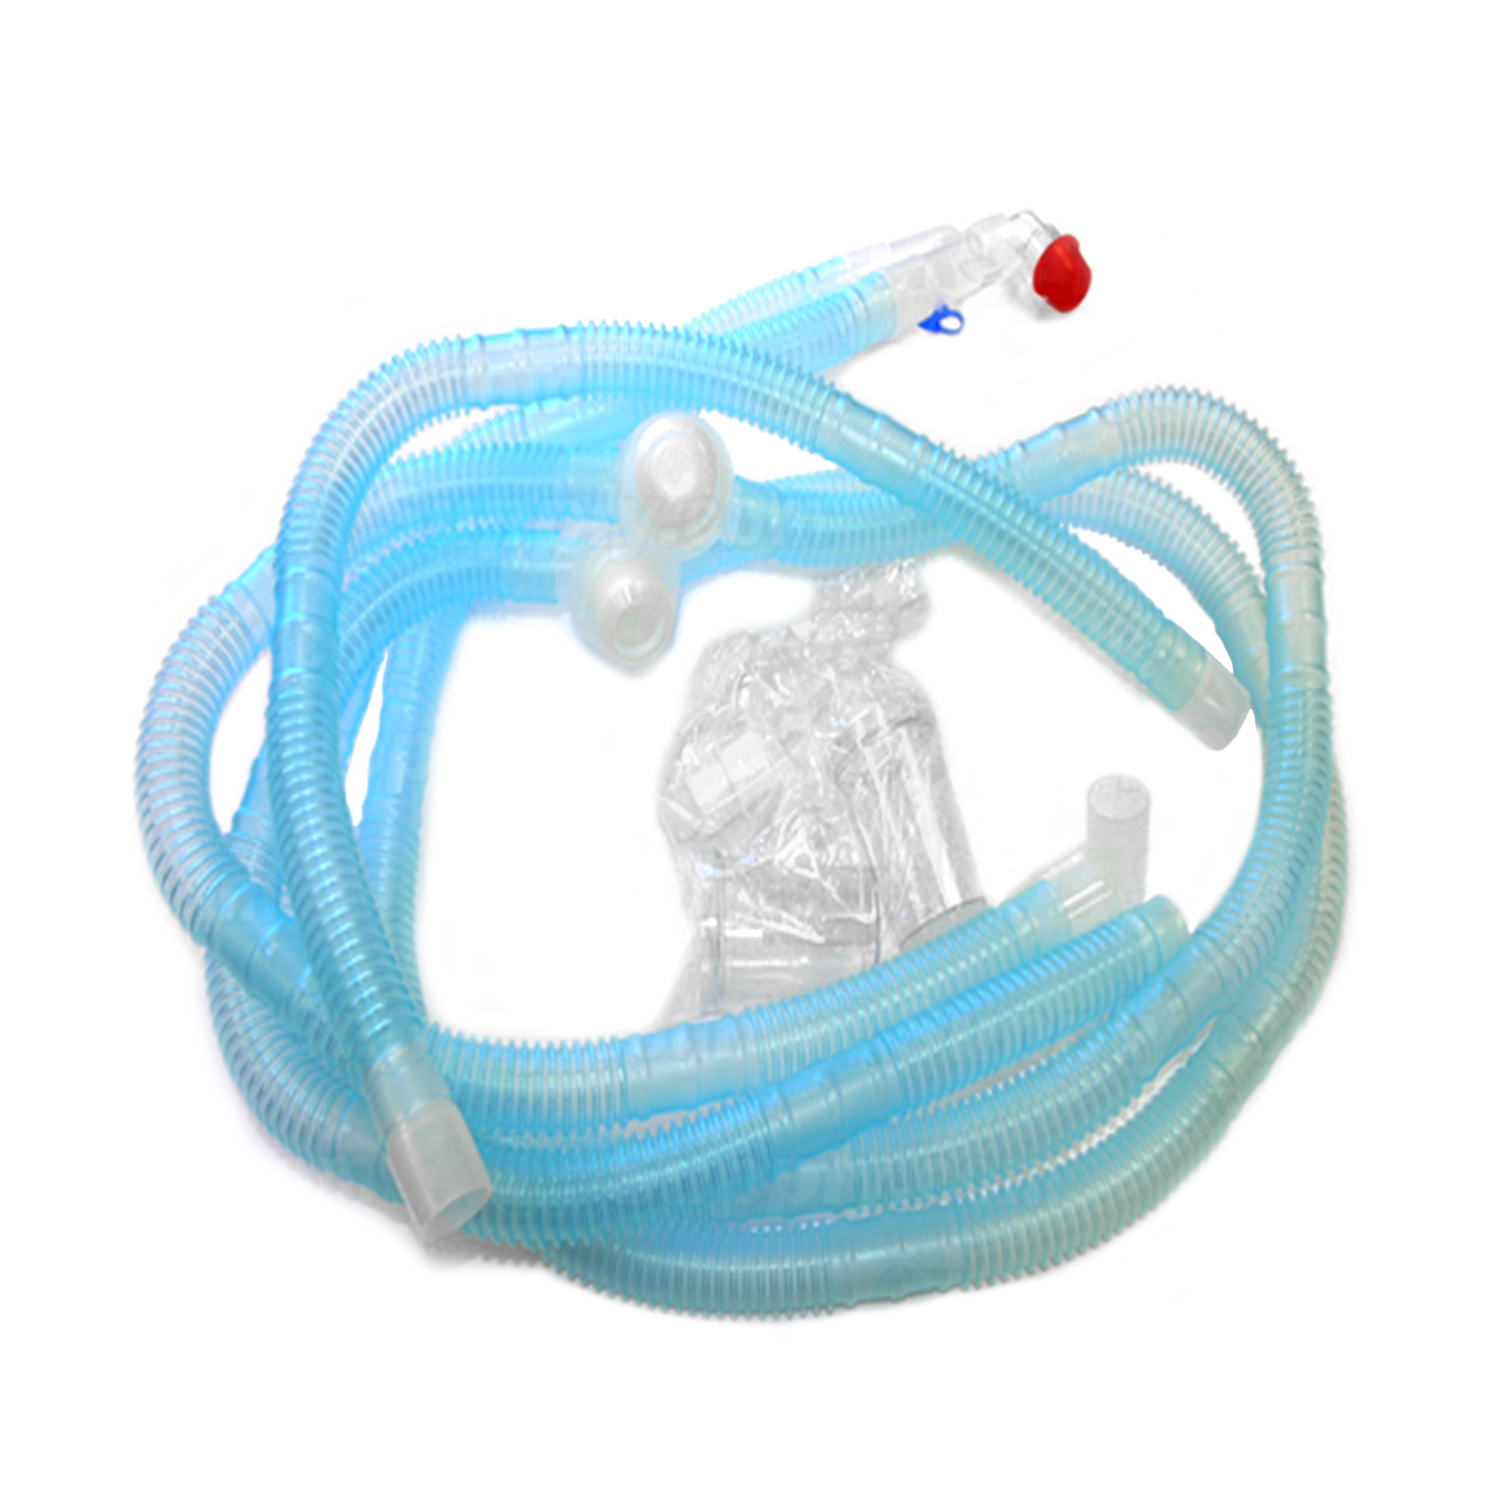 Adult Respiratory Breathing Circuit for Most Respiratory Ventilators